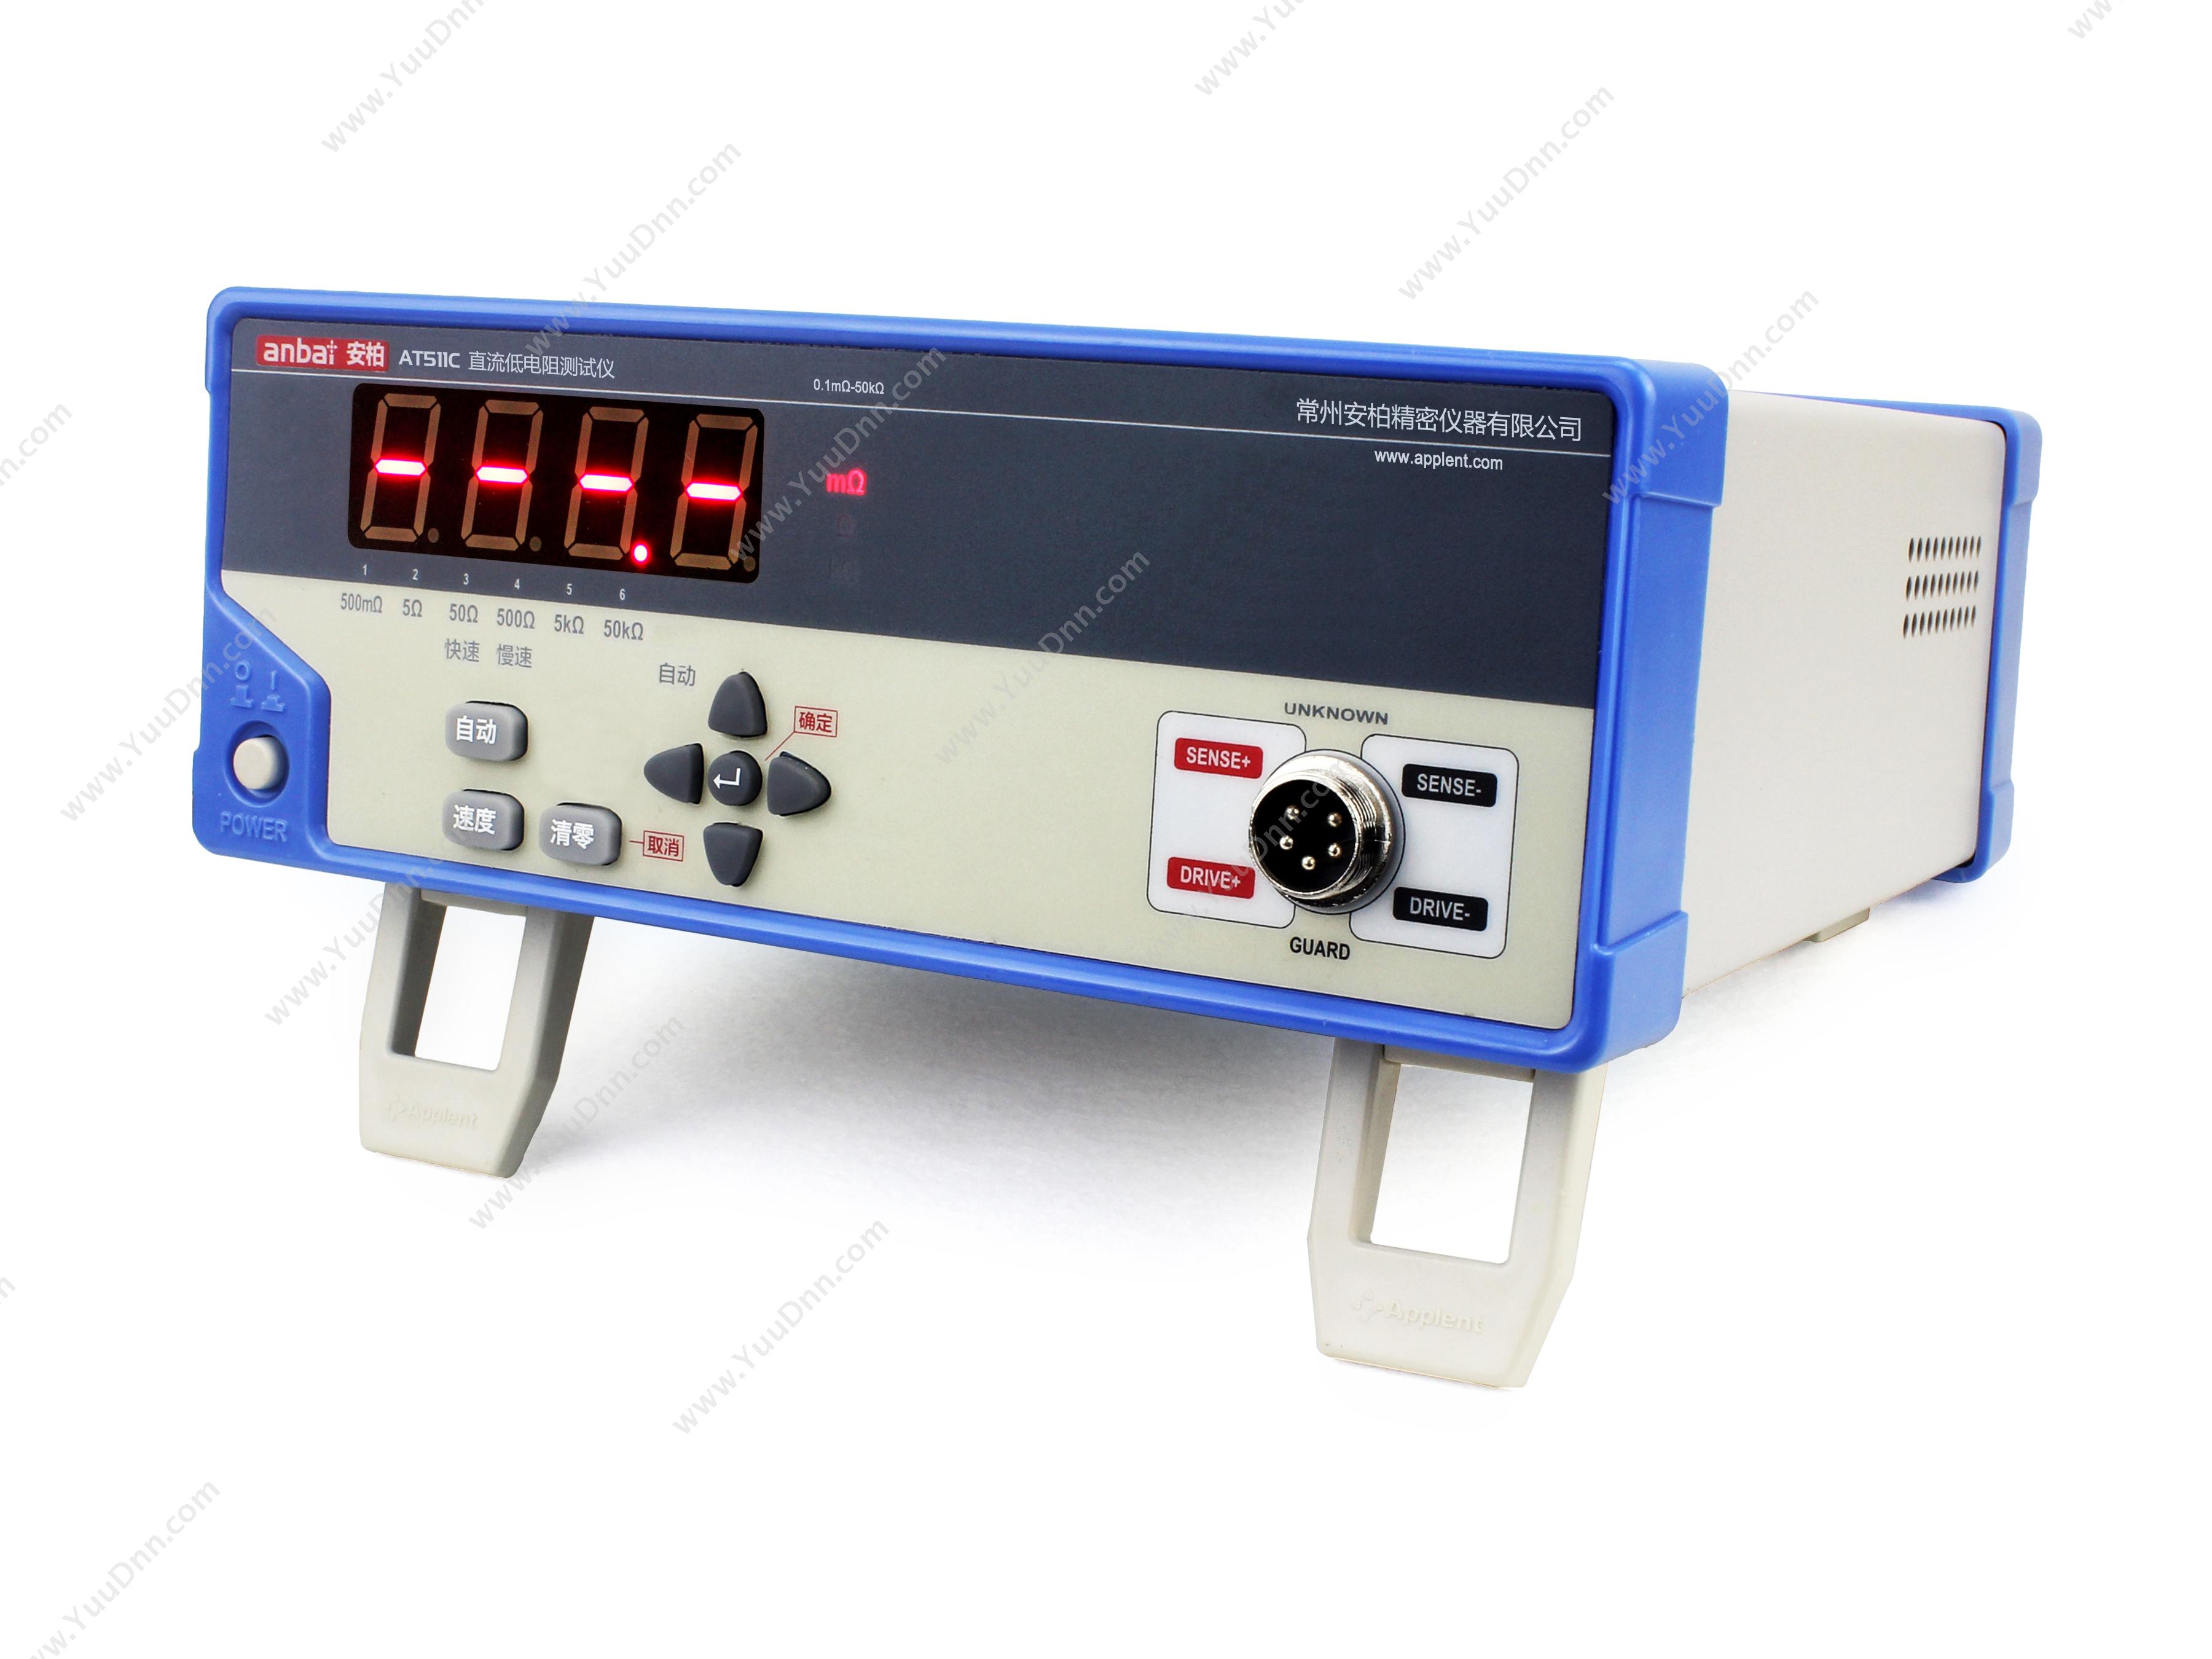 常州安柏 Applent AT511C 直流低电阻测试仪(0.1mΩ~50kΩ) 绝缘电阻测试仪